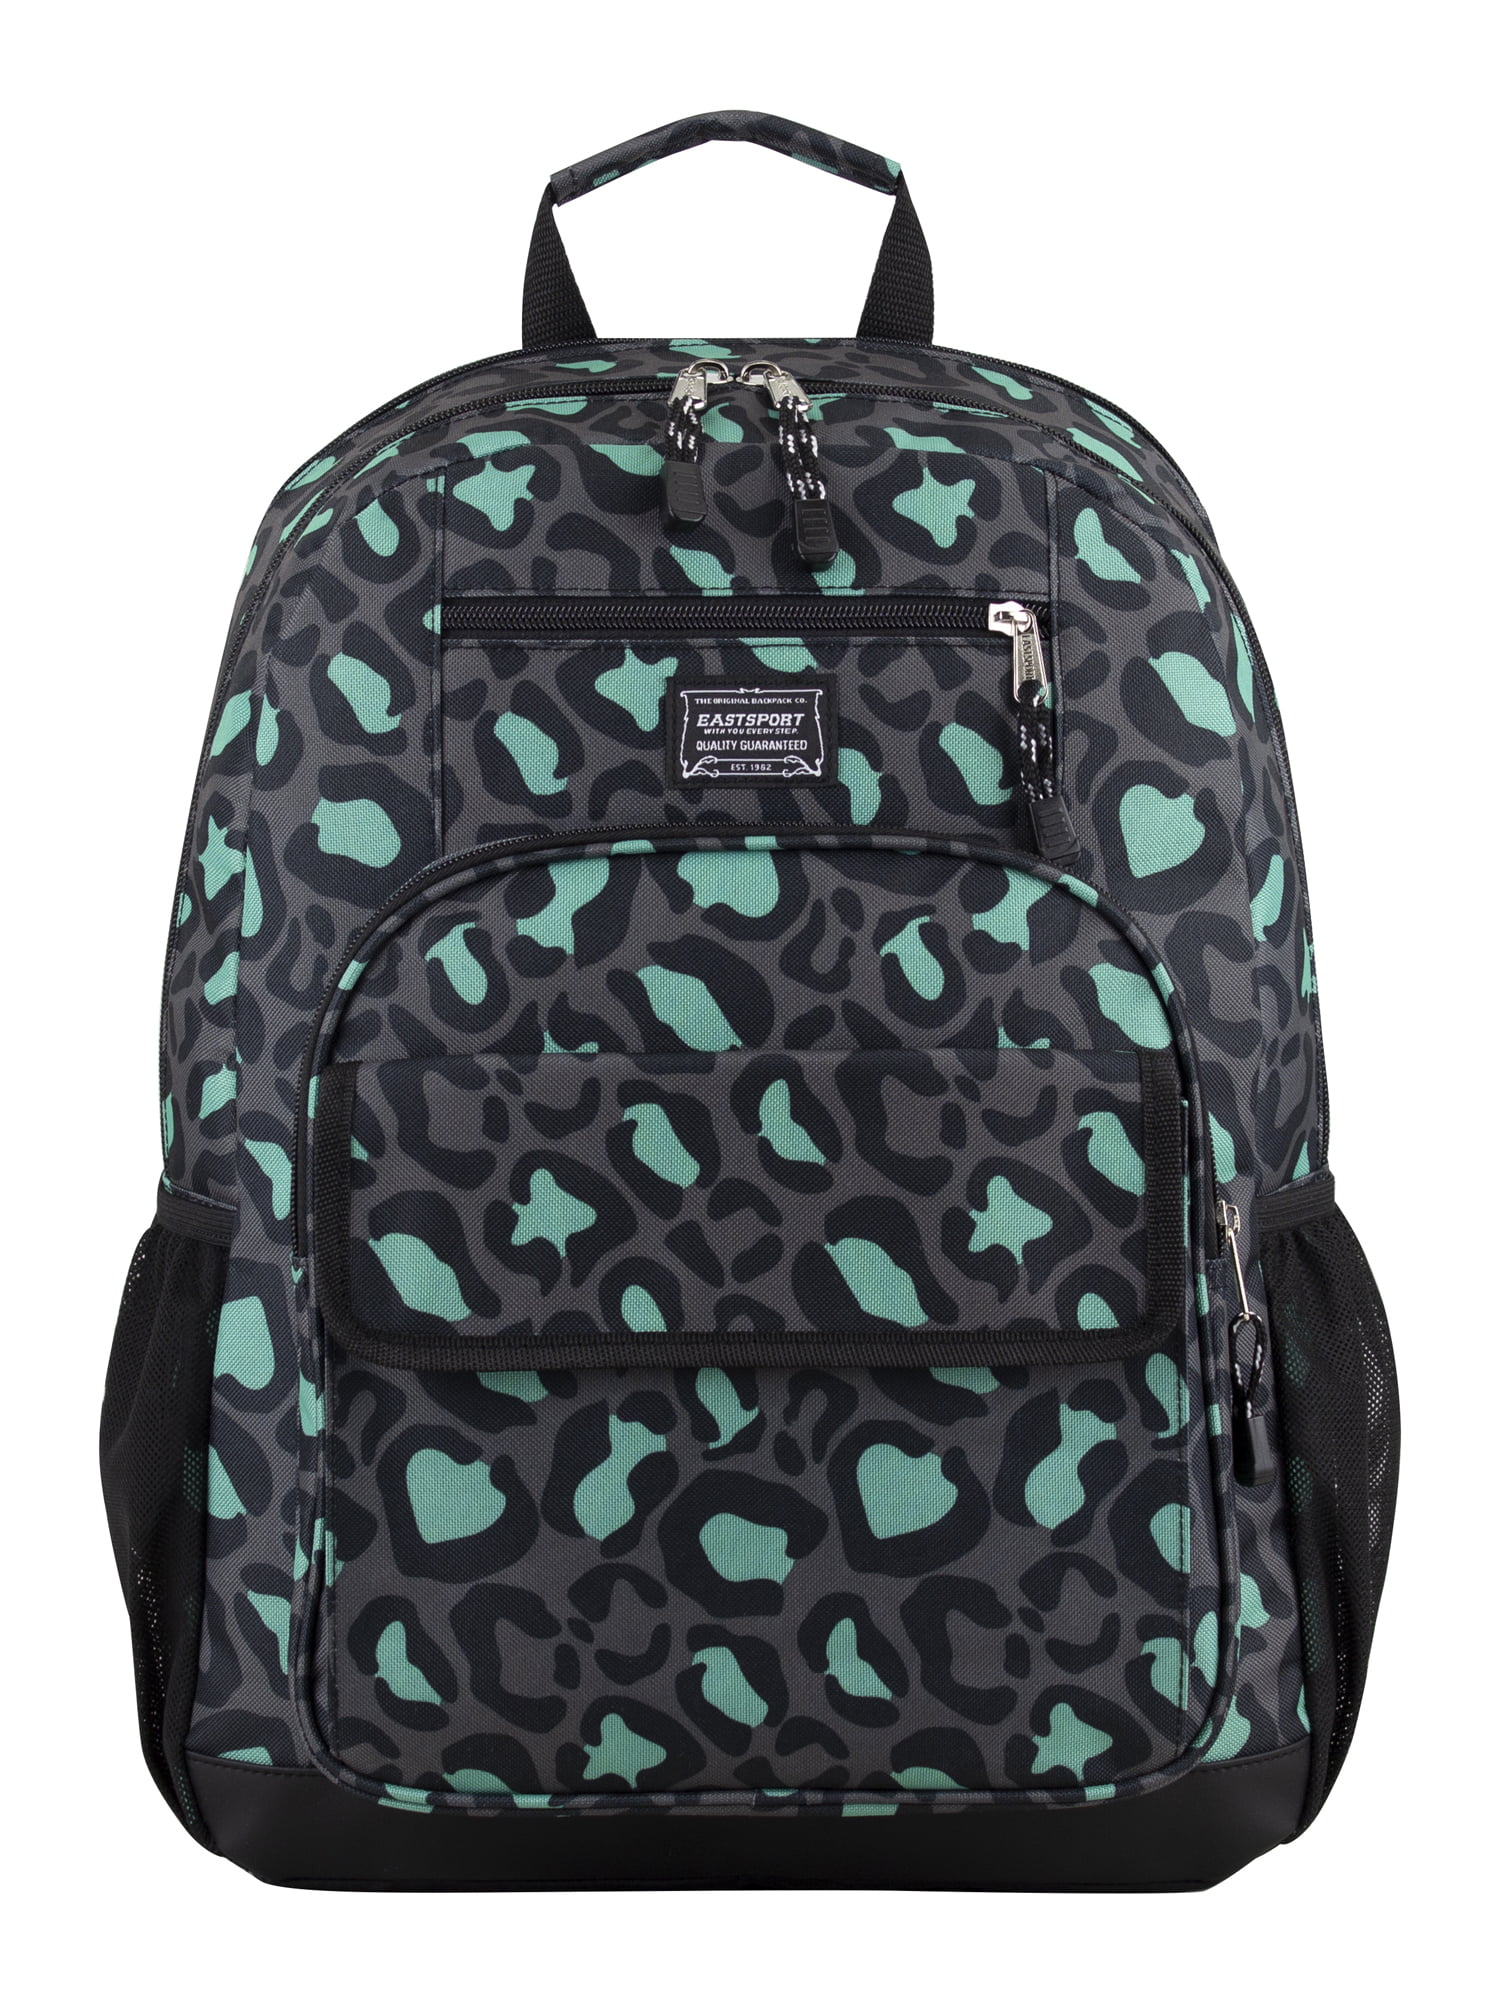 Eastsport Unisex Everyday Tech Backpack, Black Mint Leopard